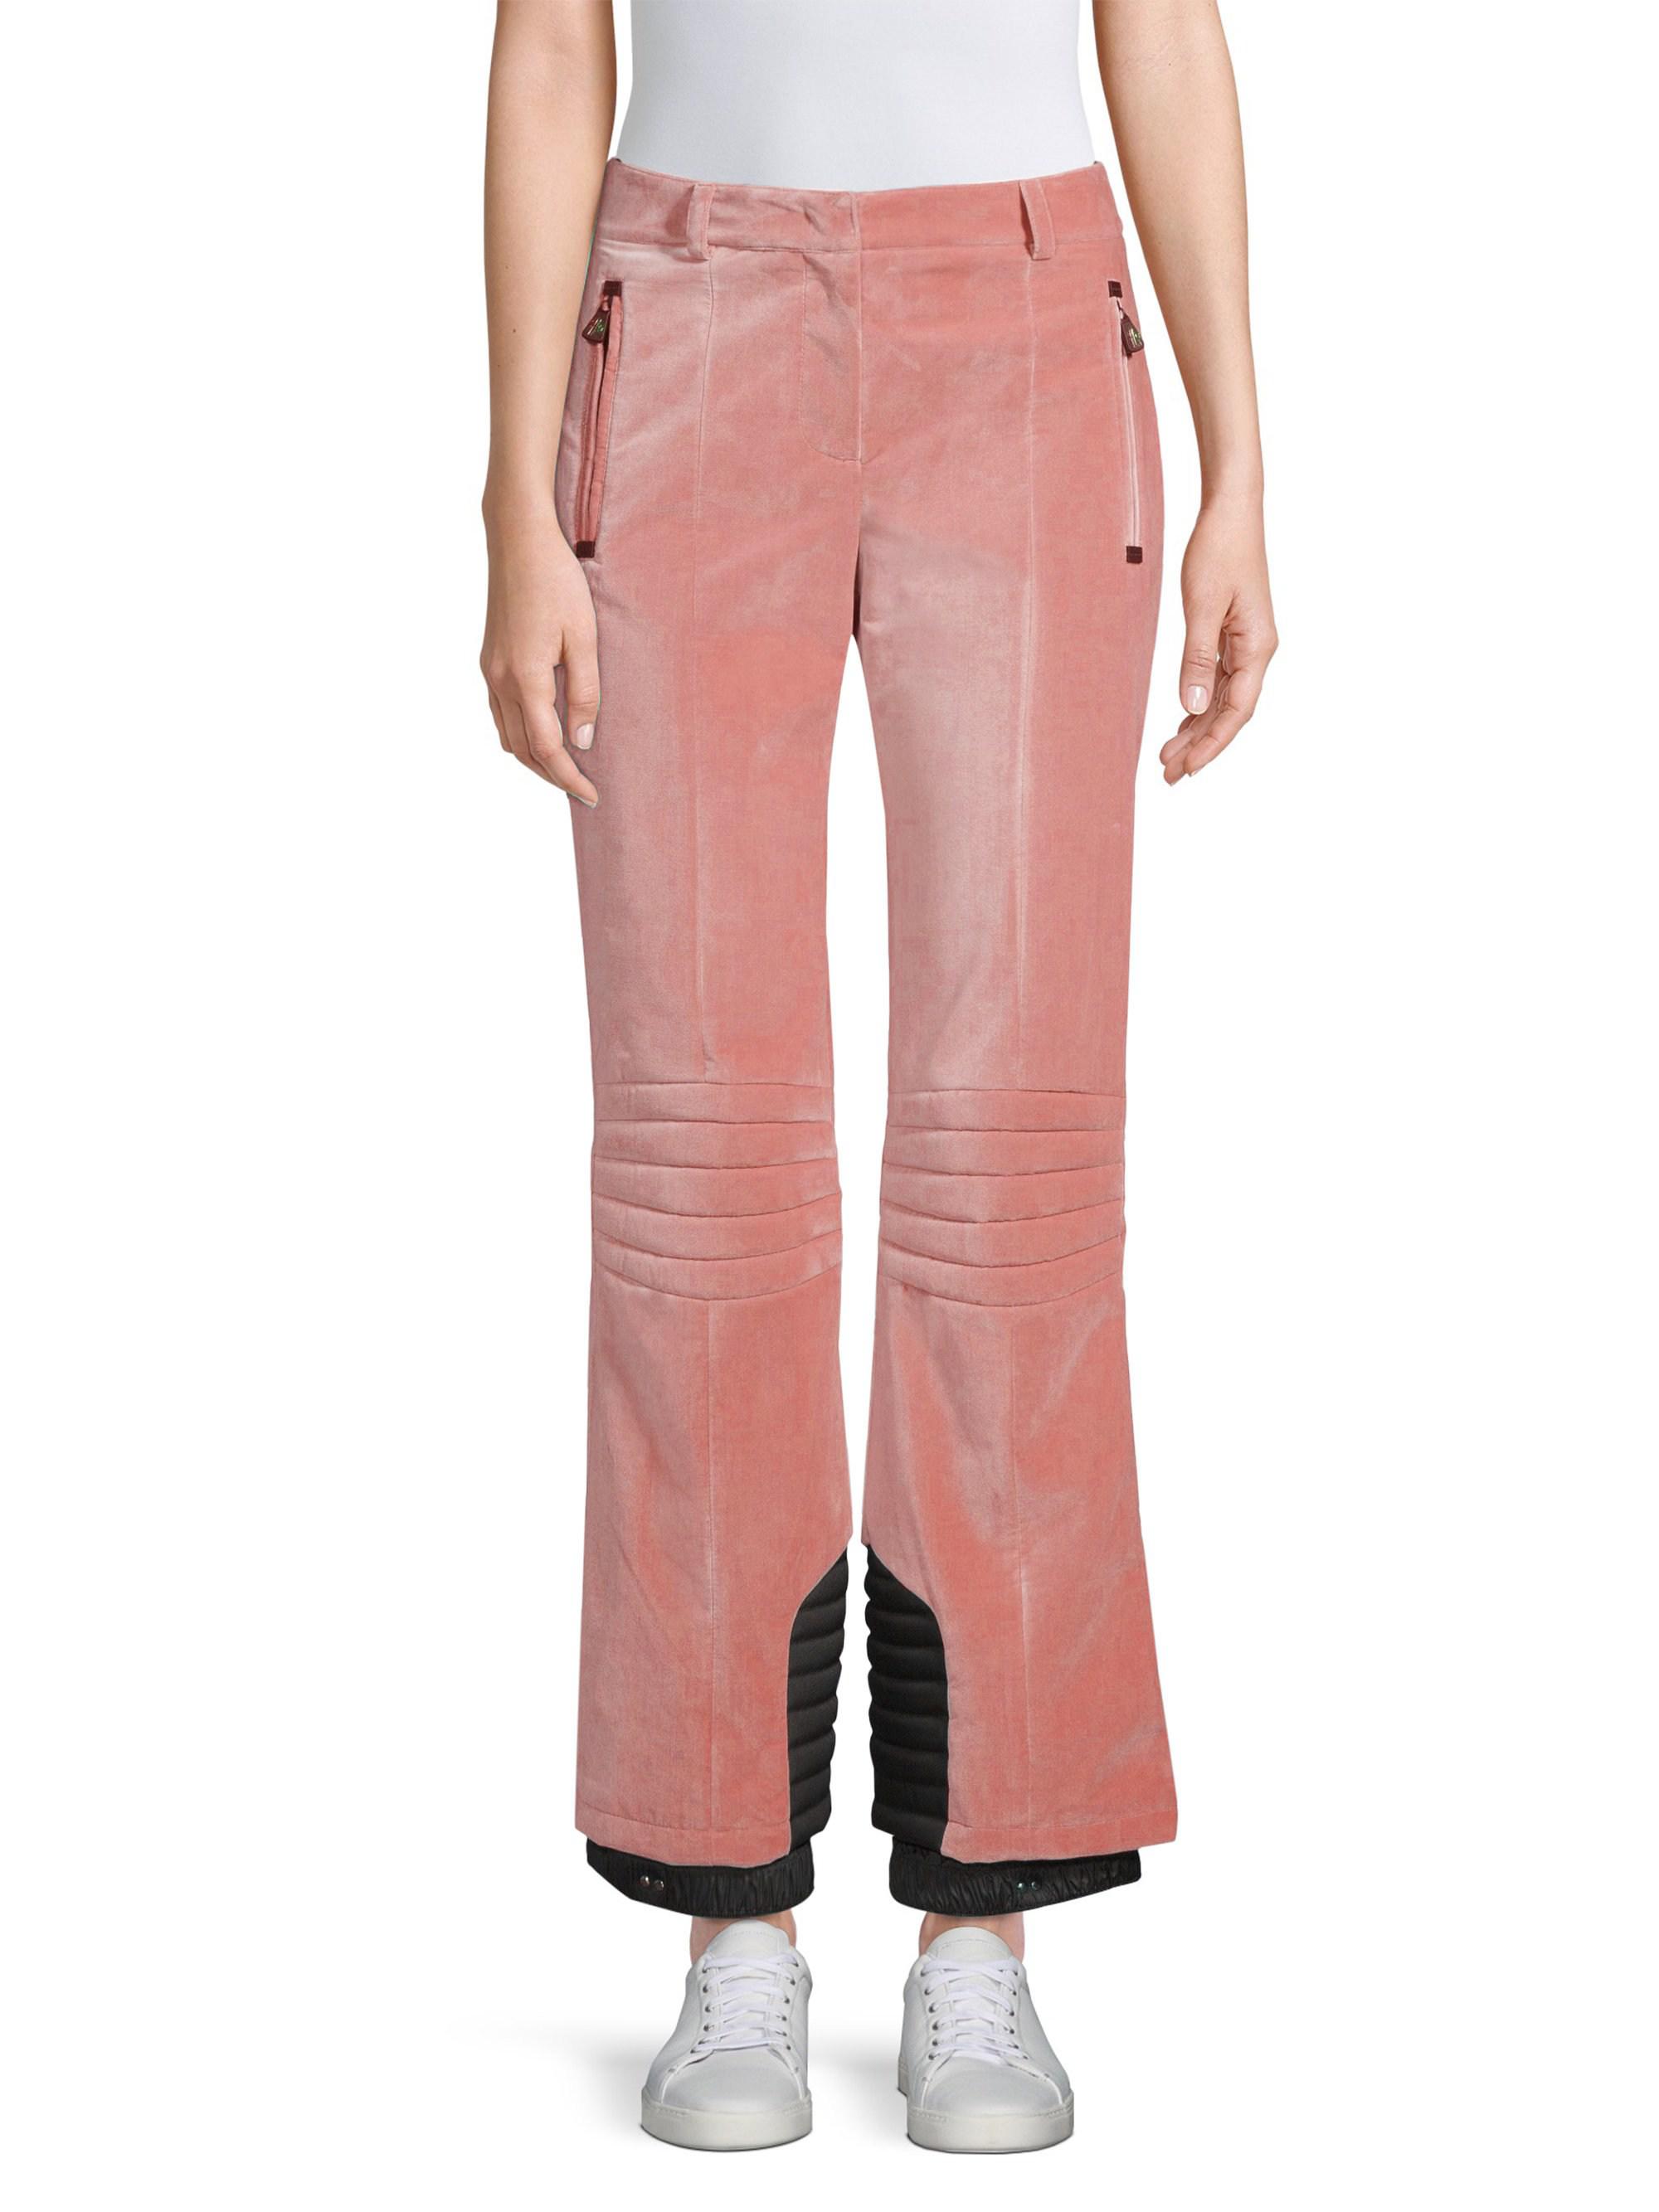 Moncler Velvet Ribbed Ski Pants in Pink - Lyst